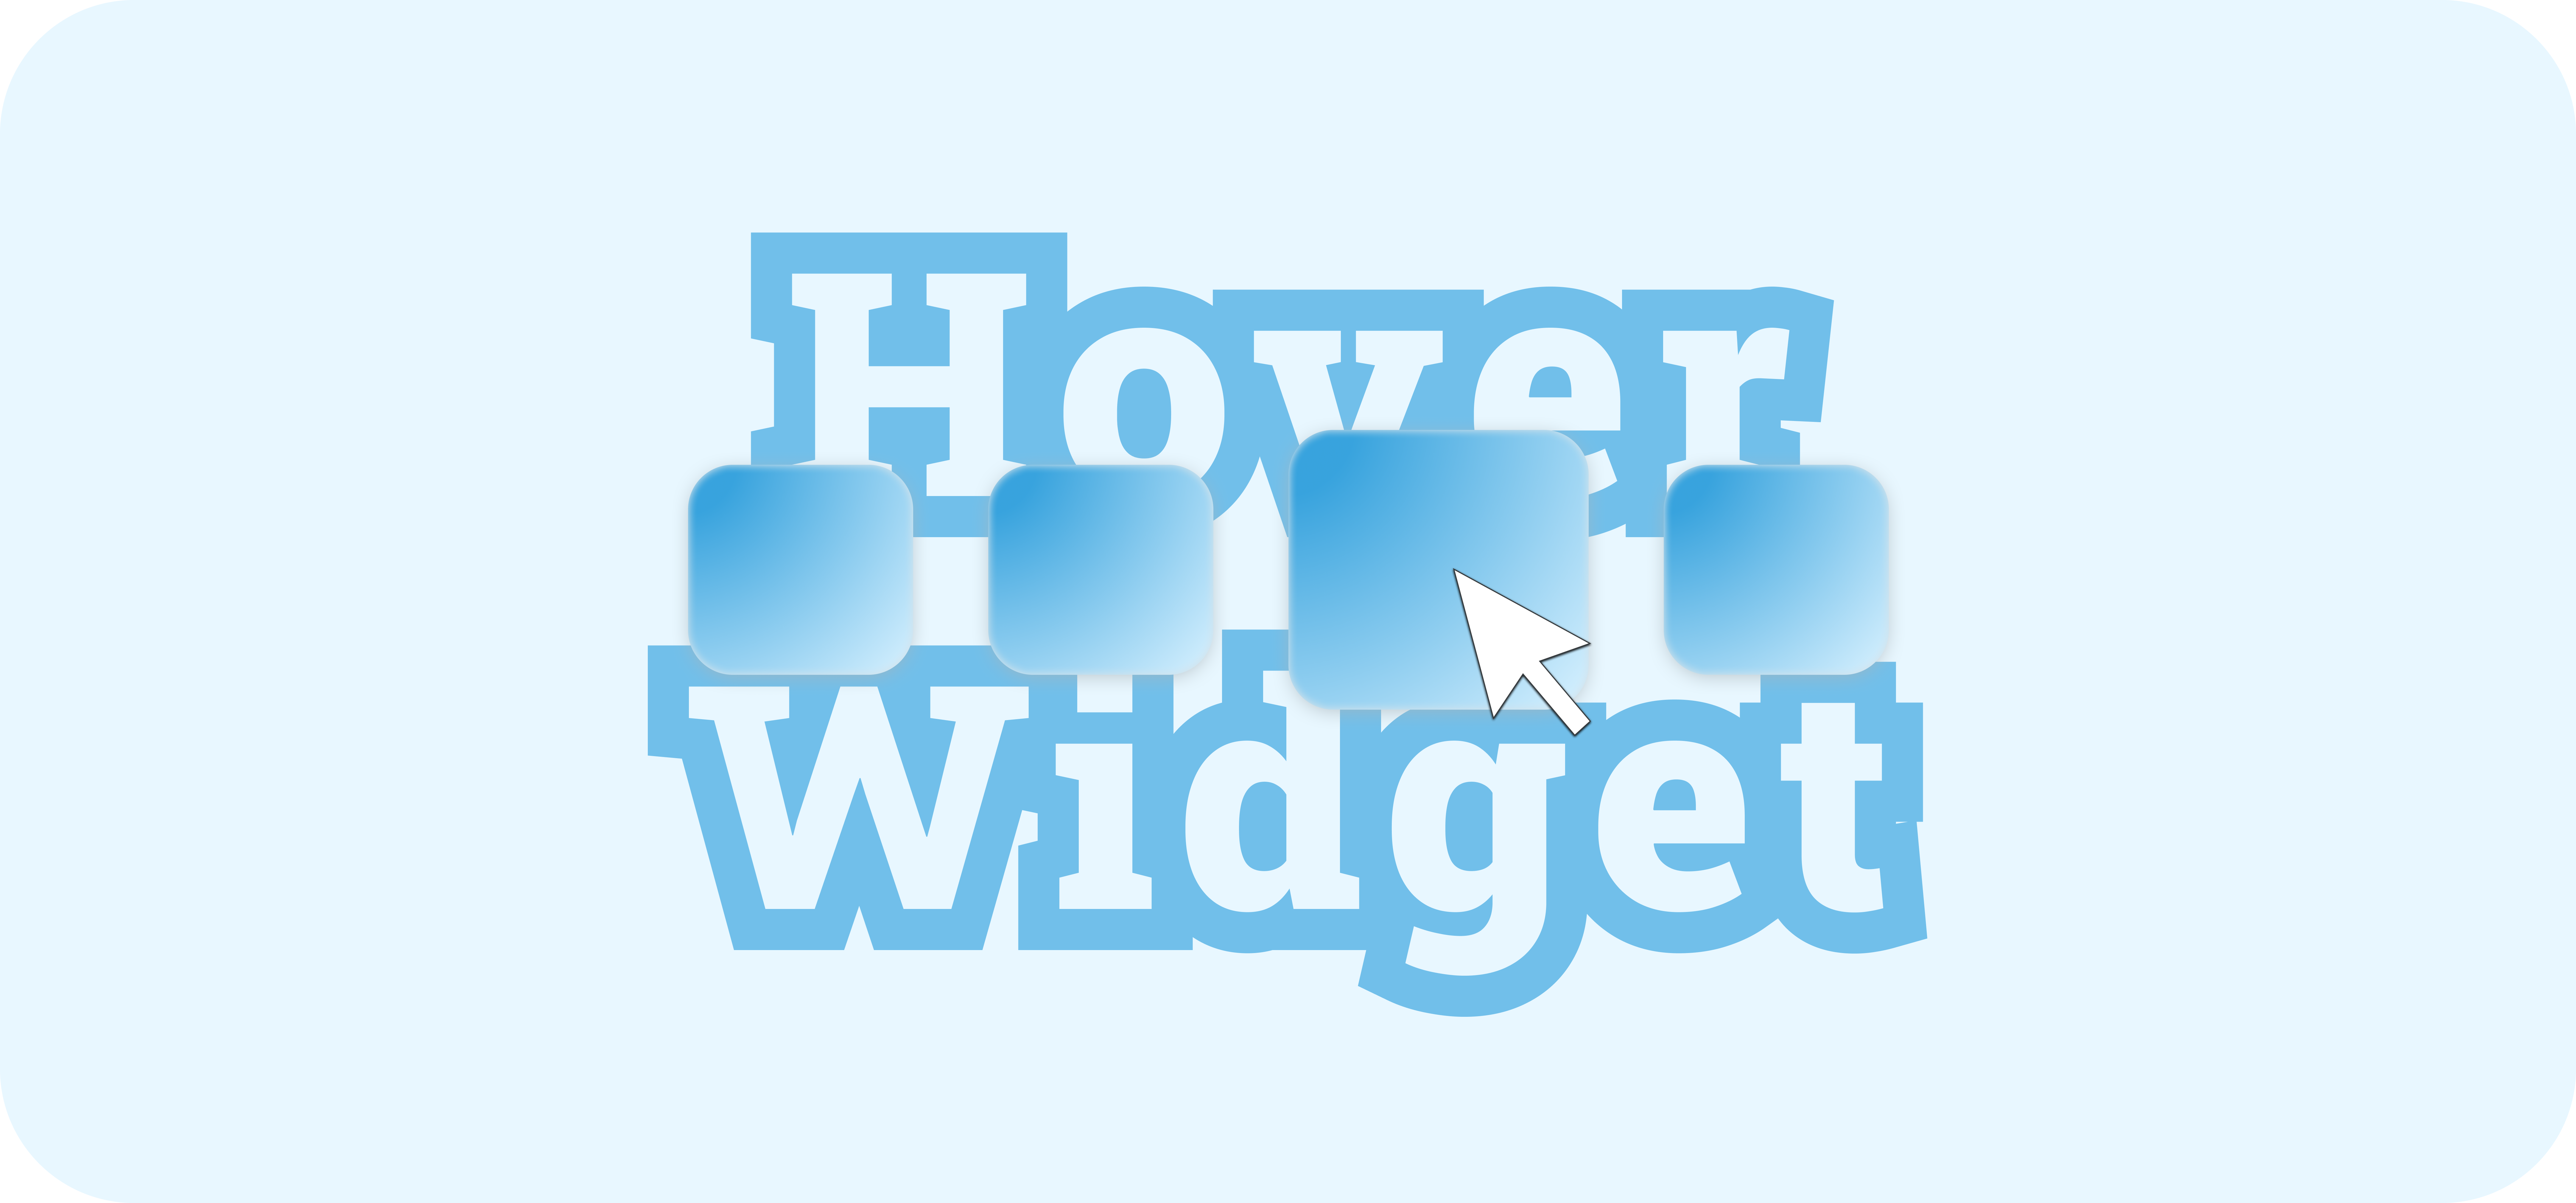 Group 3hover_widget_header